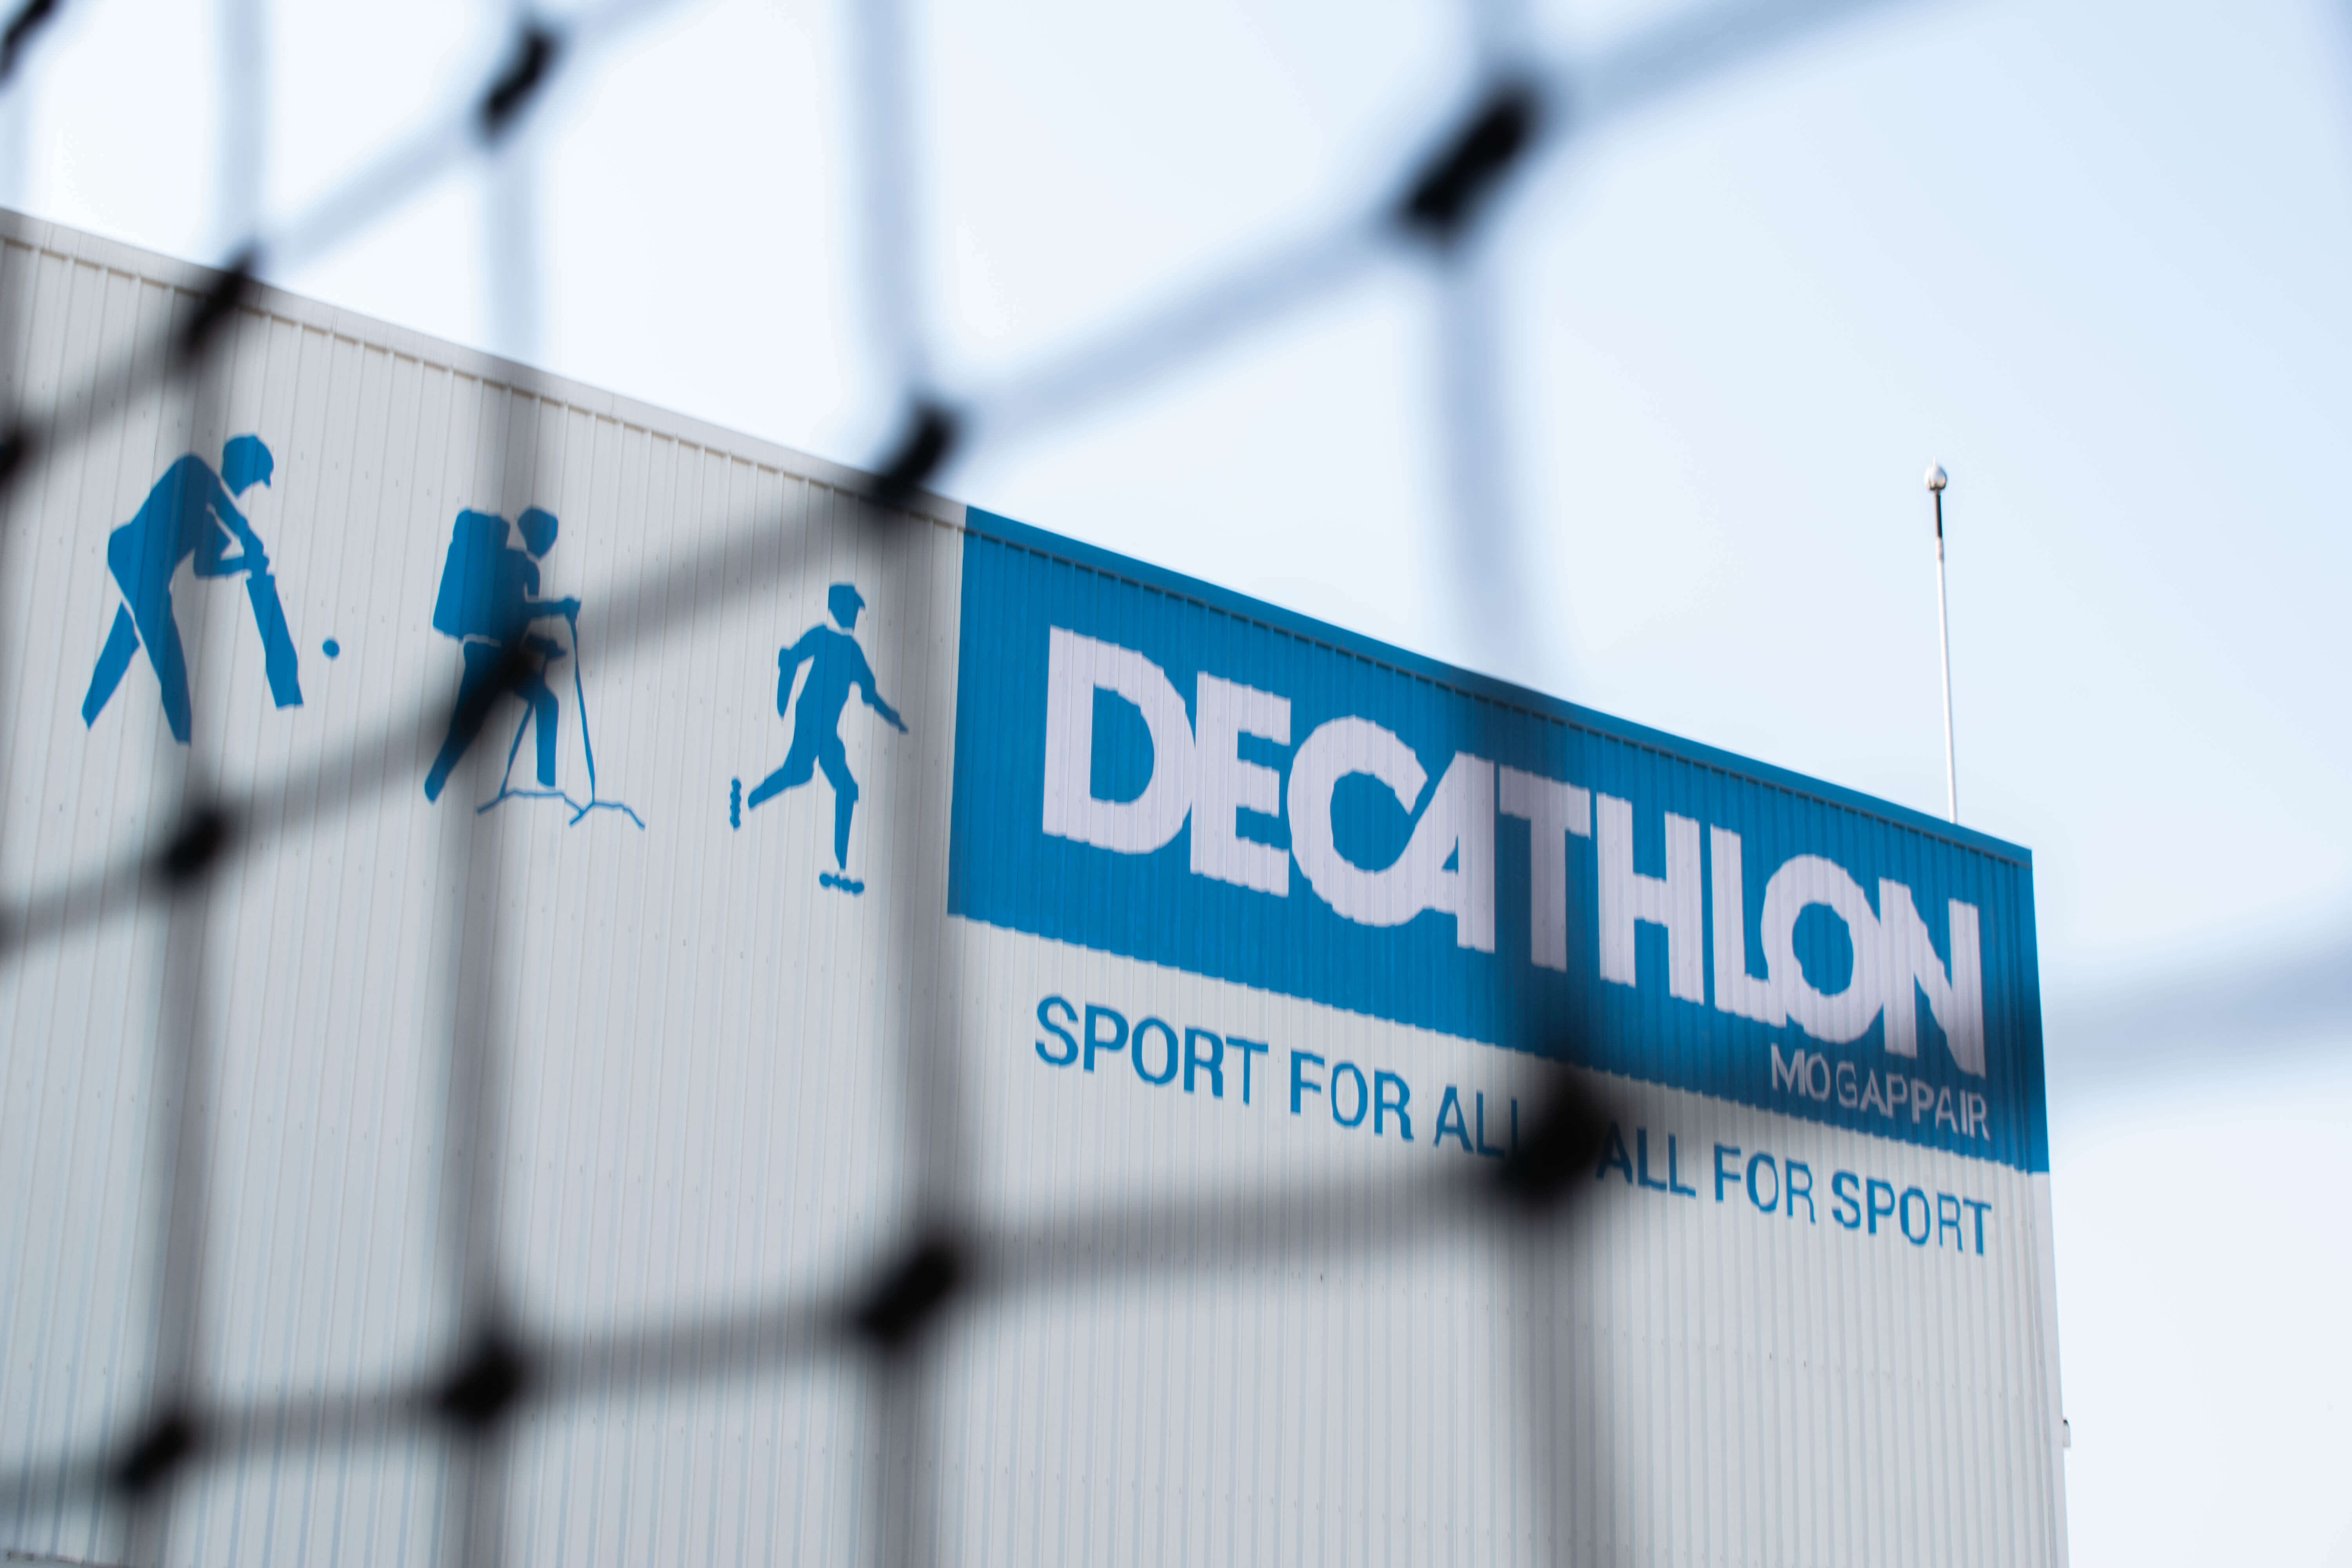 decathlon sports mogappair